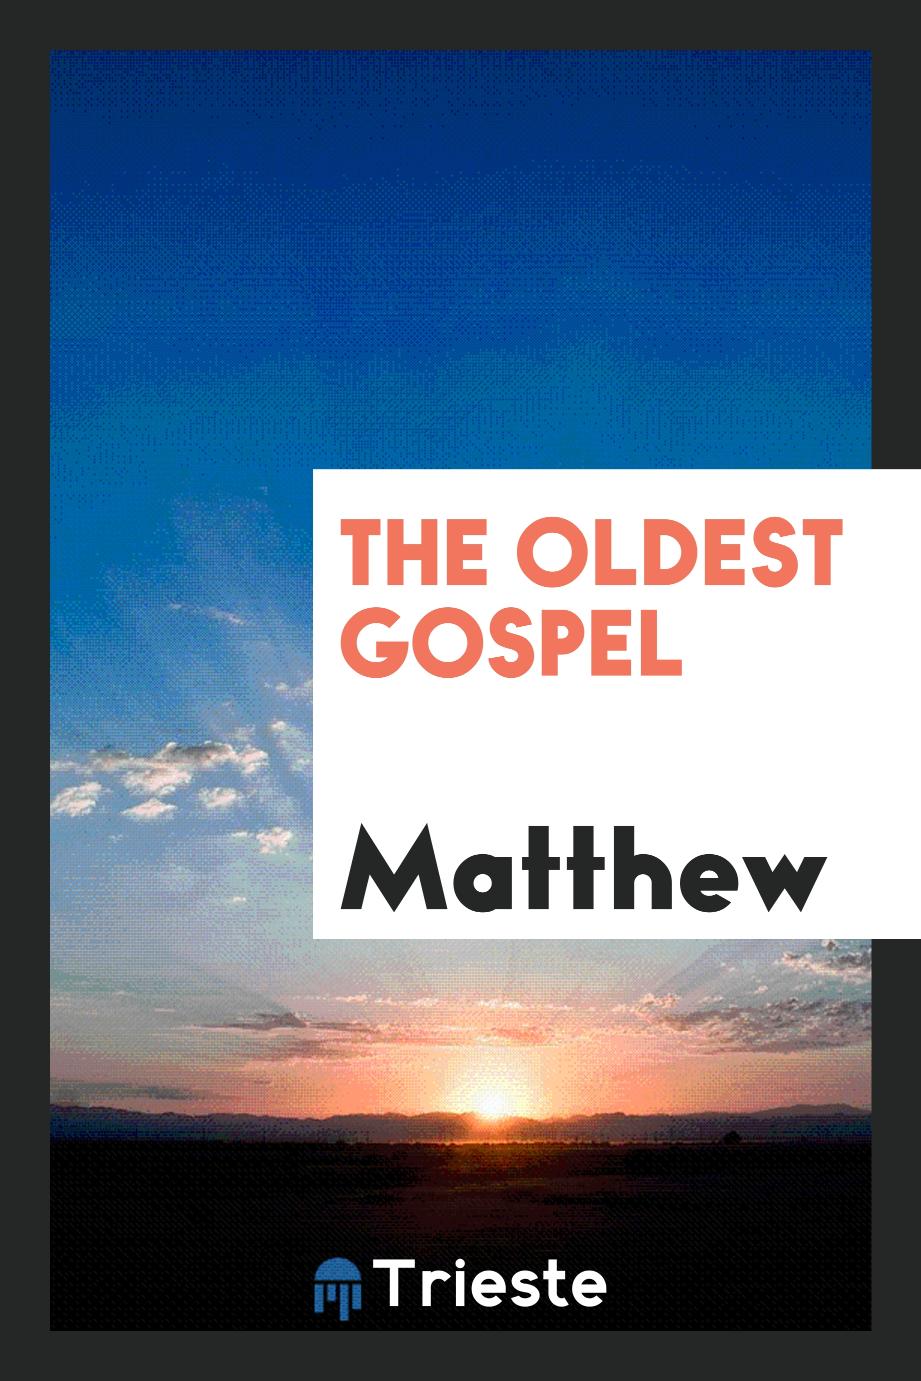 The oldest Gospel